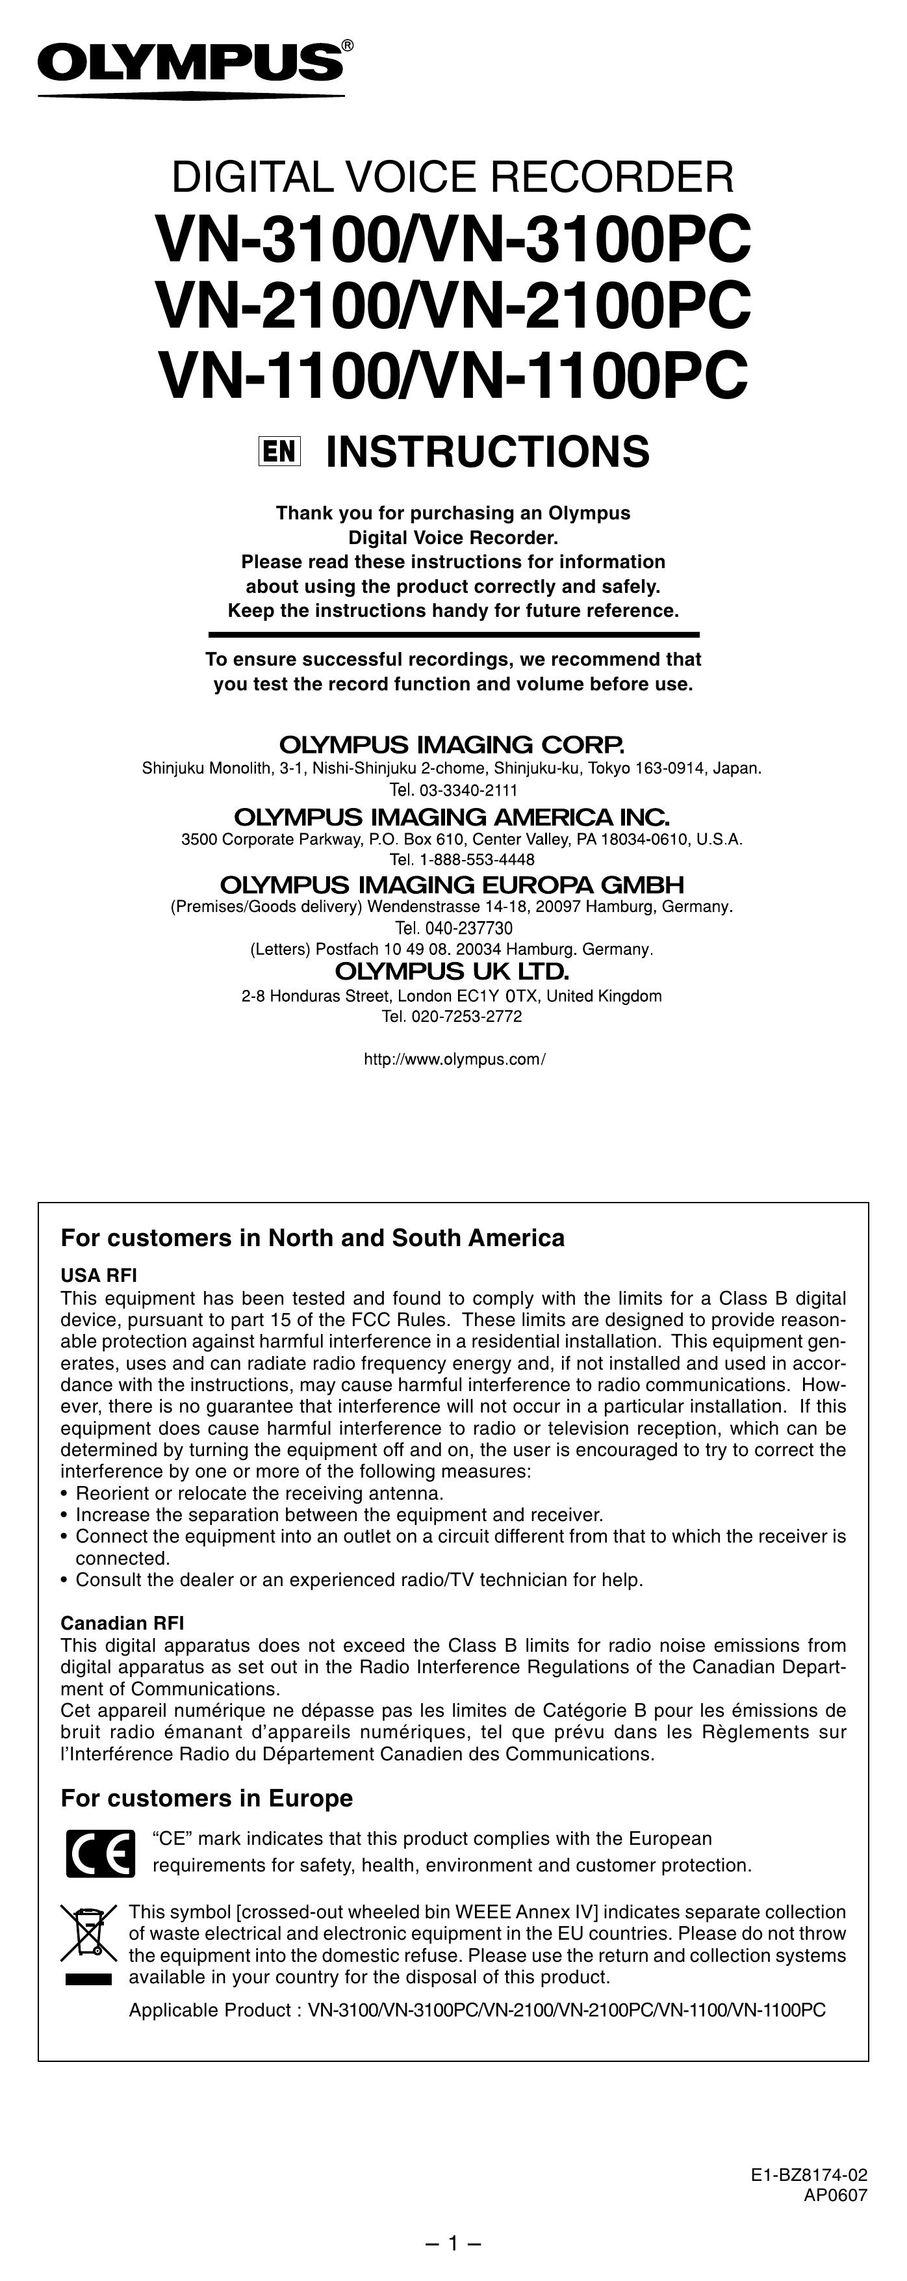 Olympus VN-1100PC DVR User Manual